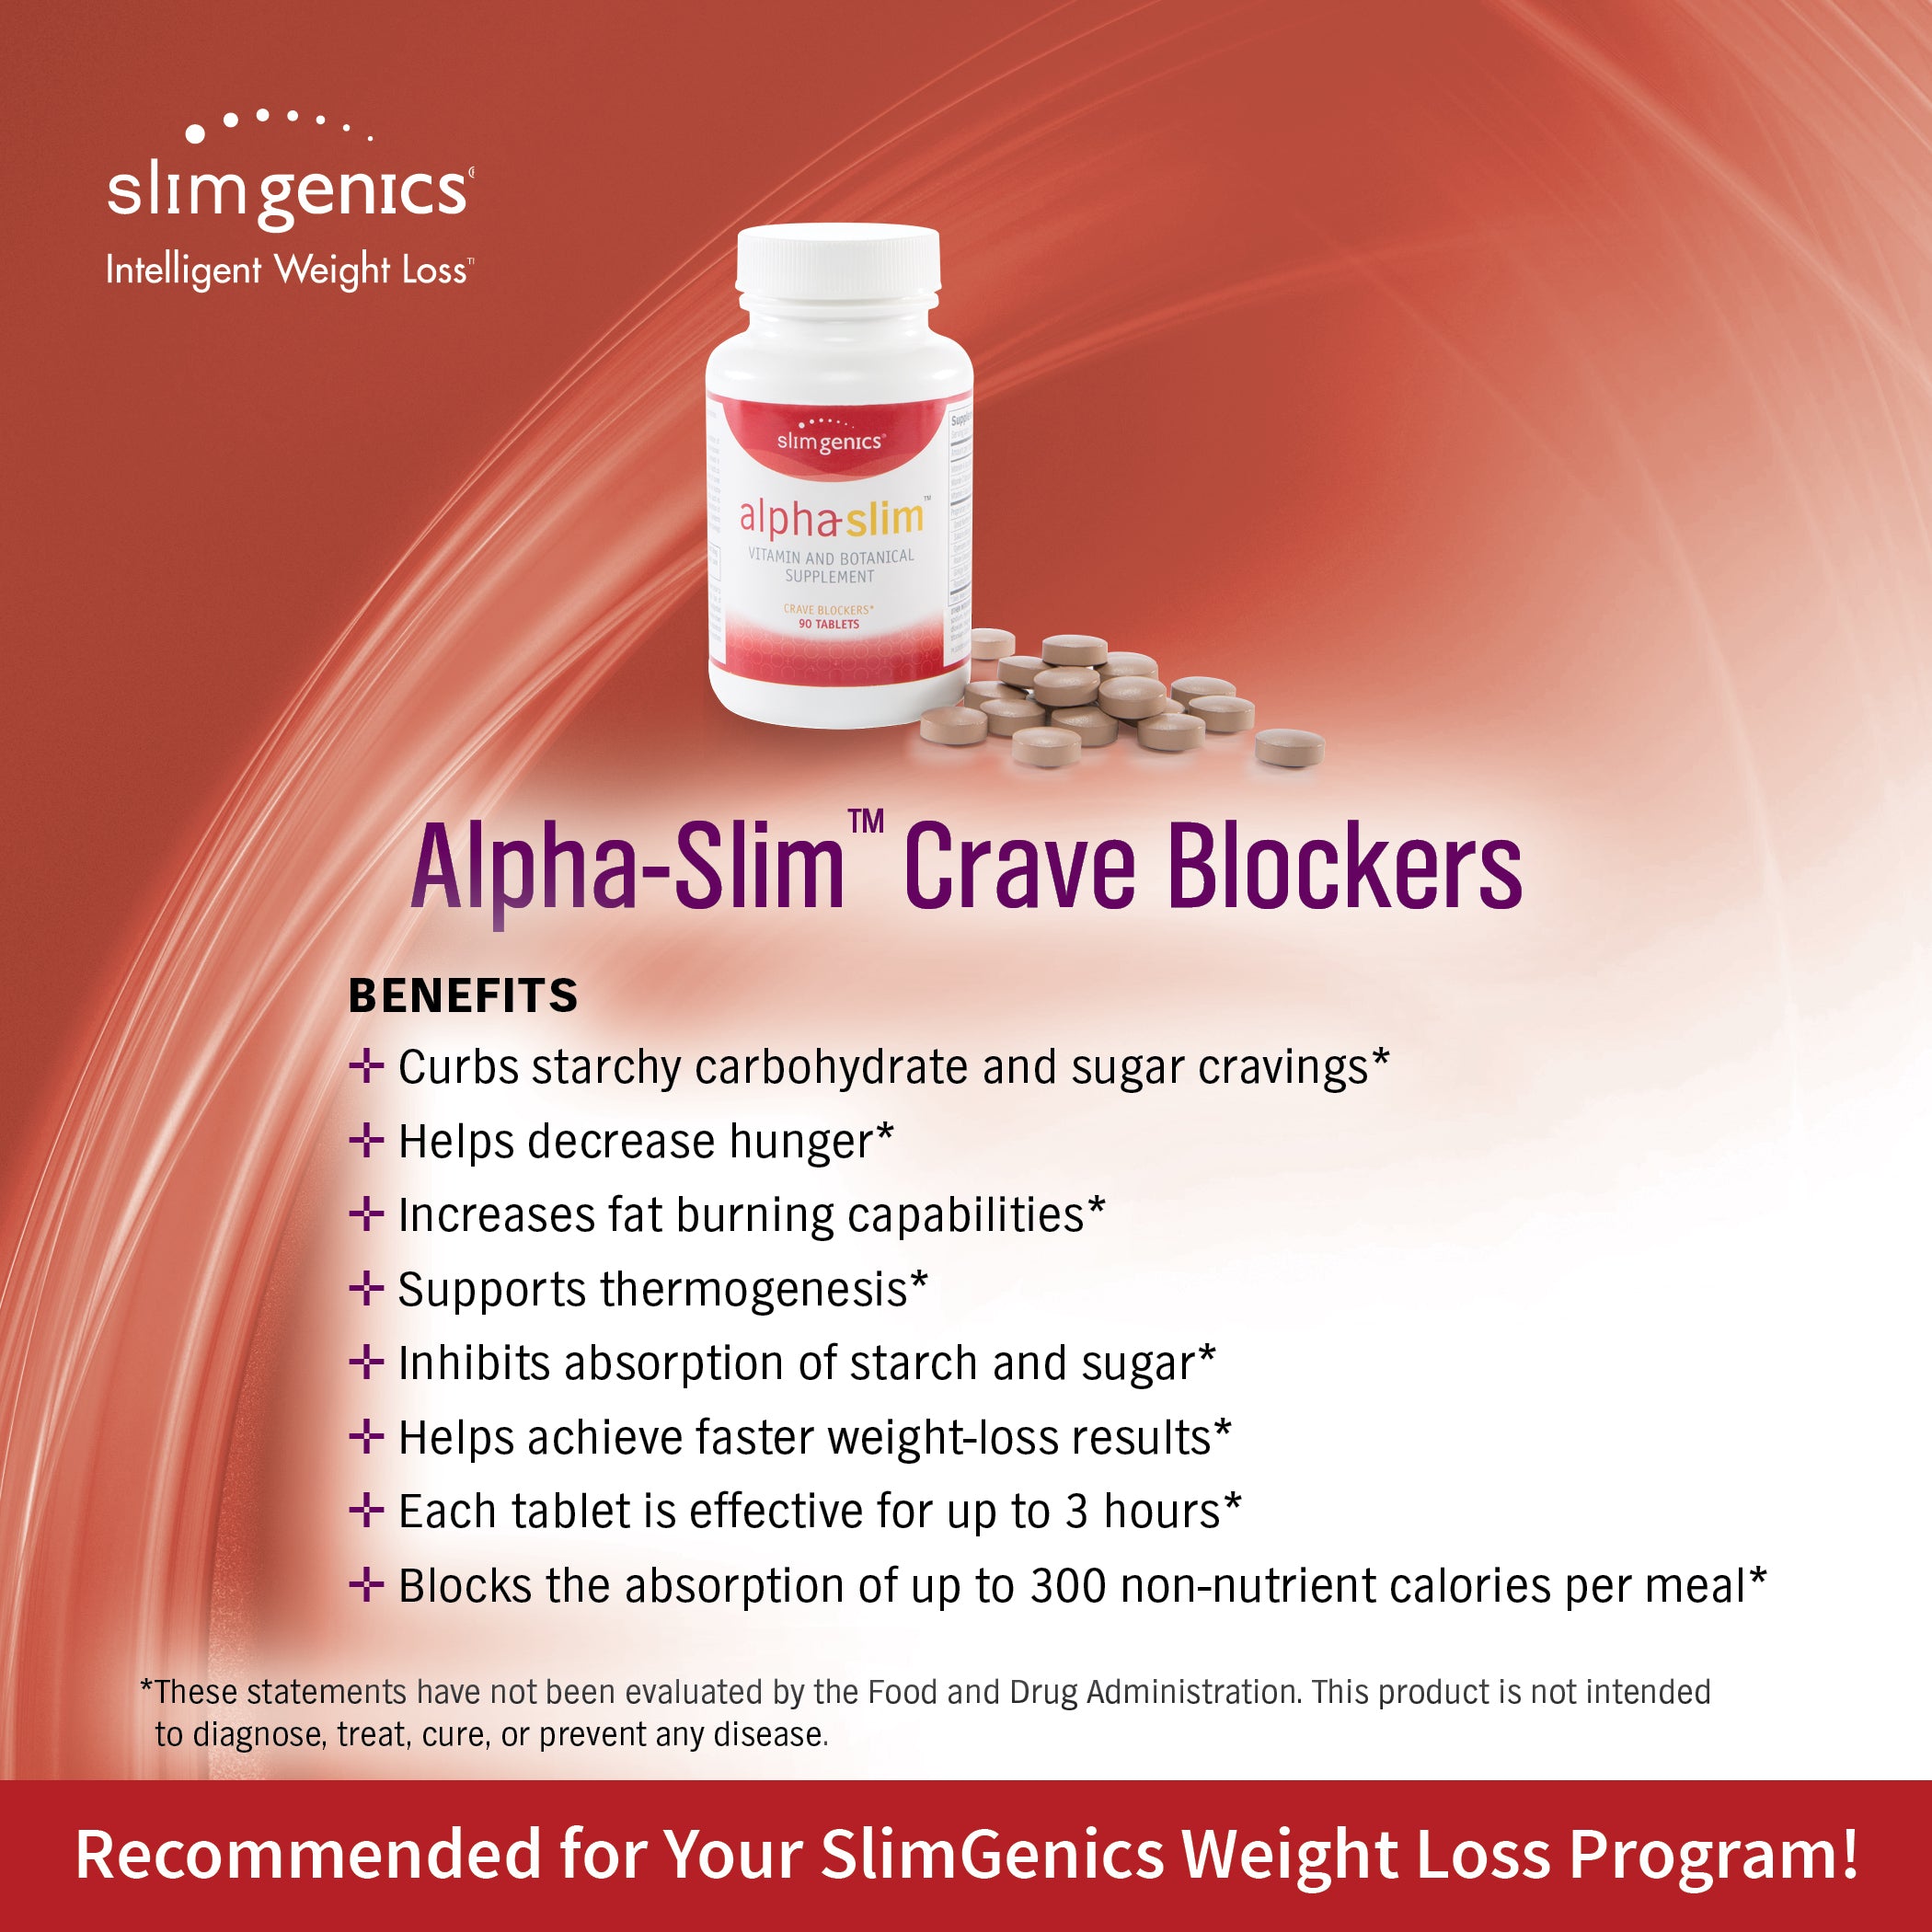 Alpha-Slim Crave Blockers